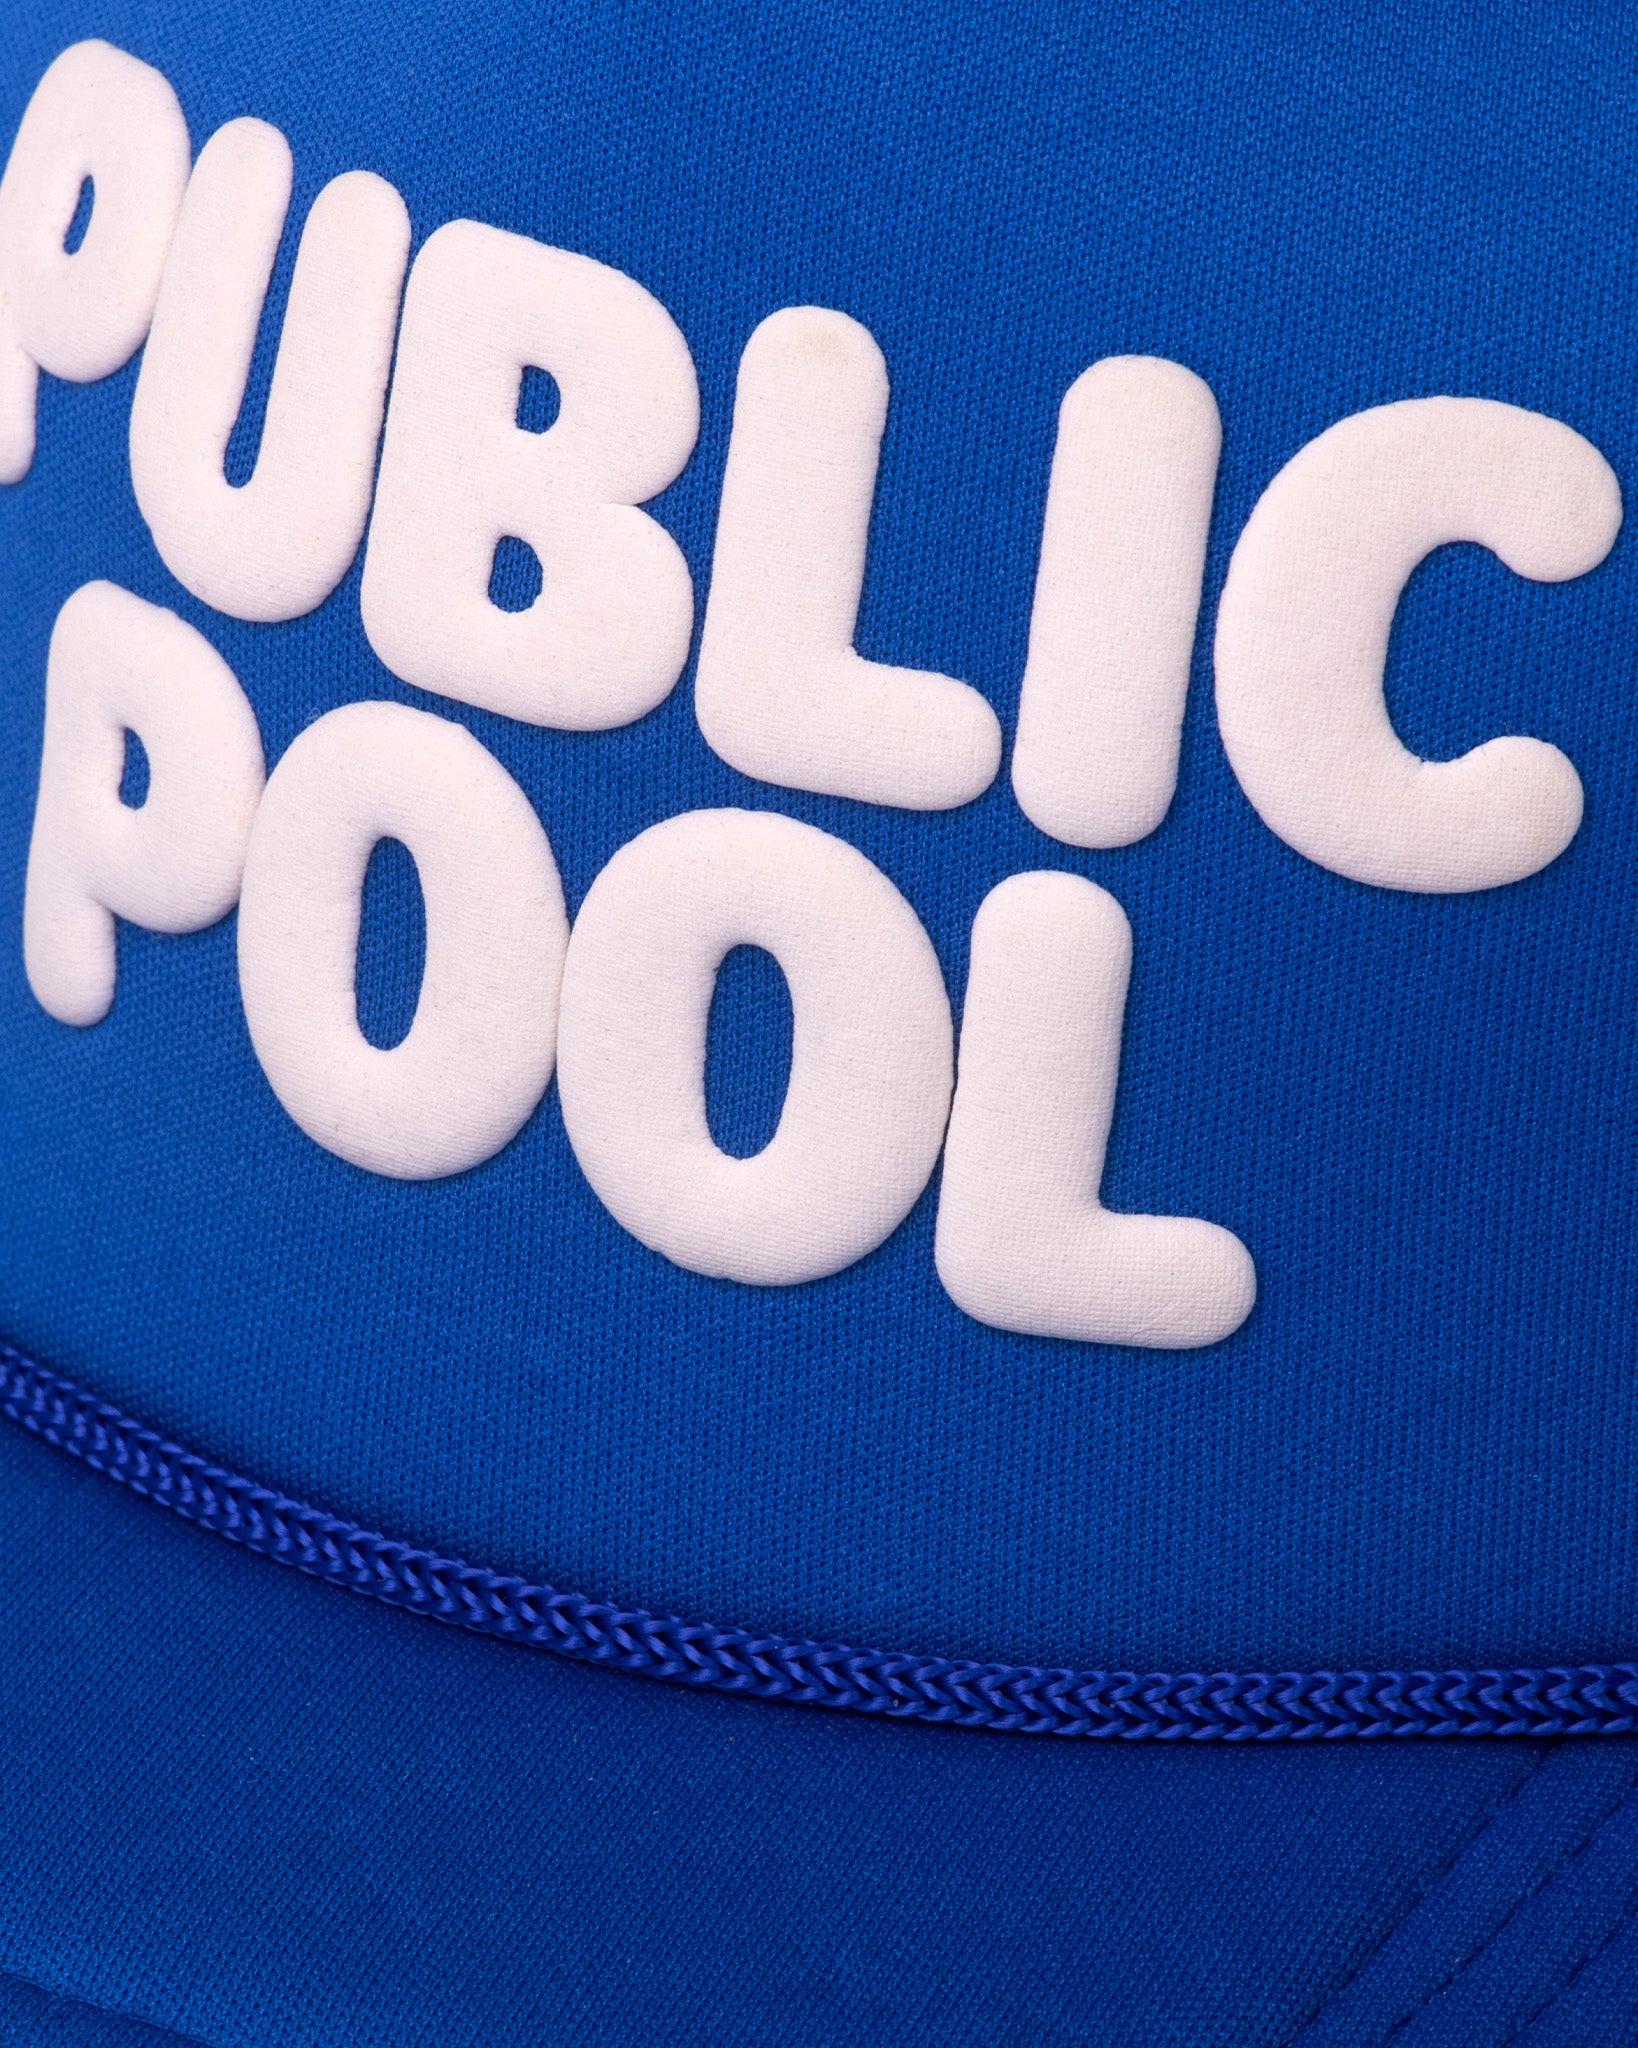 An image showcasing a puff print Public Pool logo on a blue trucker hat. 